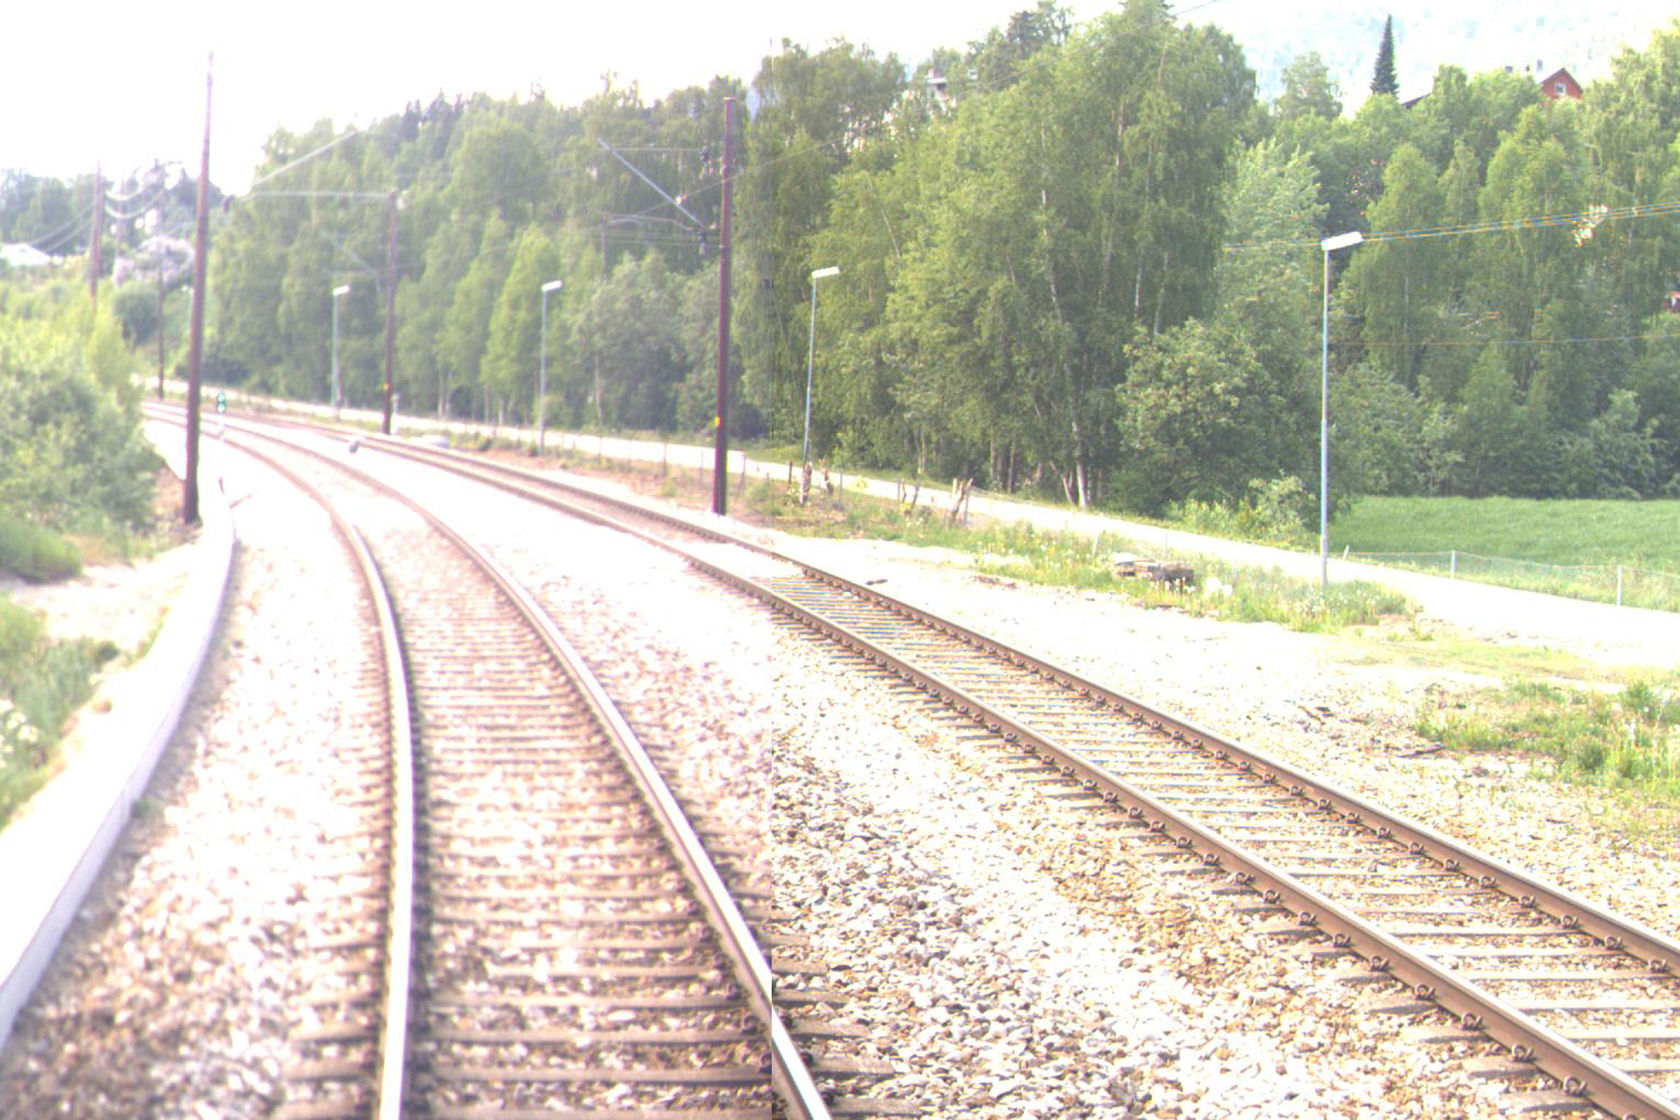 Tracks at Fron station